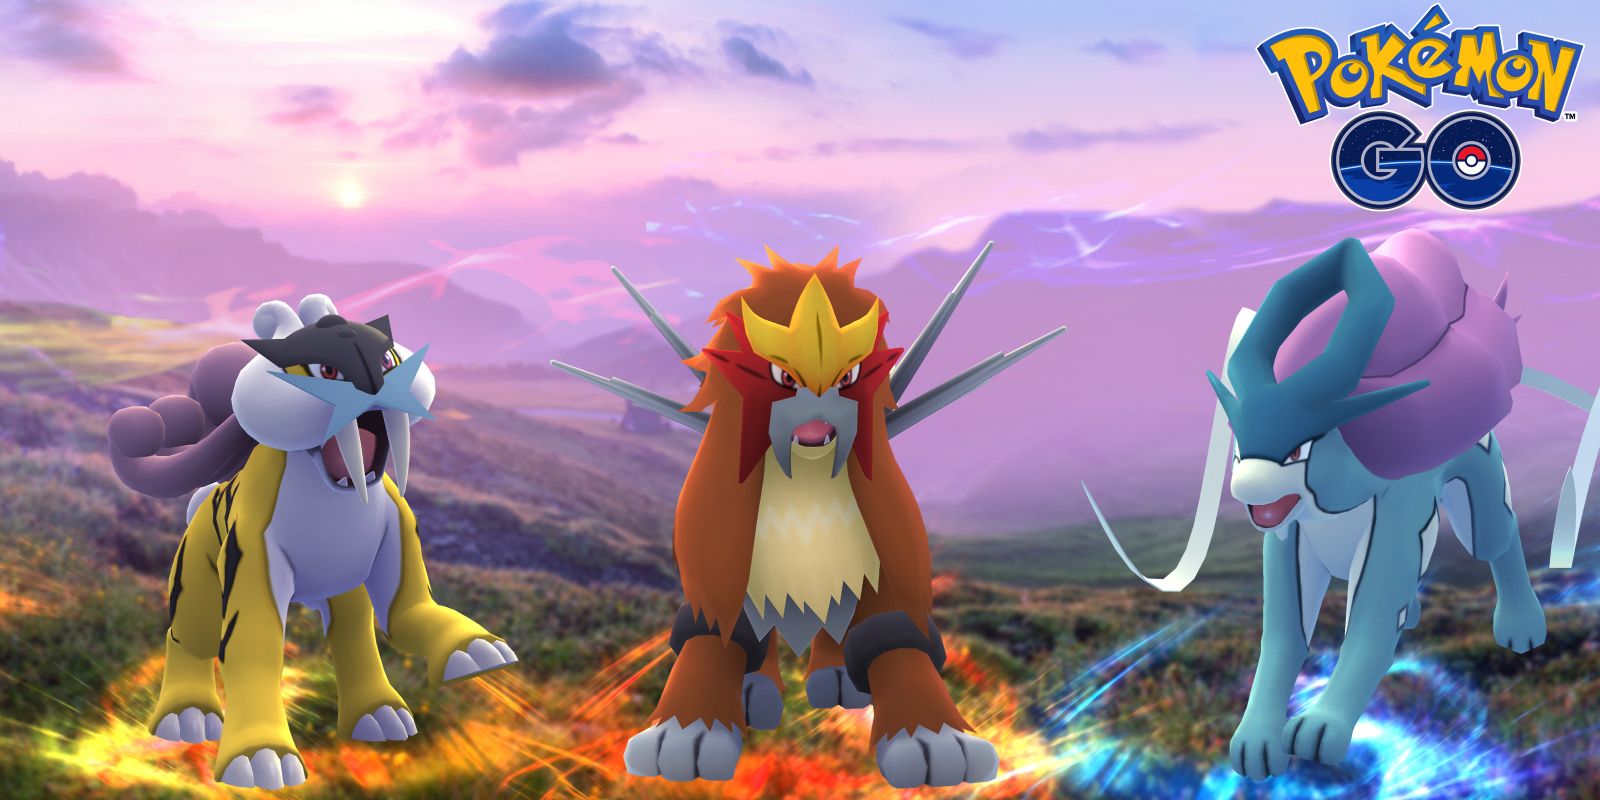 Pokémon GO's Biggest Changes Since Launch Legendary Research Buddy